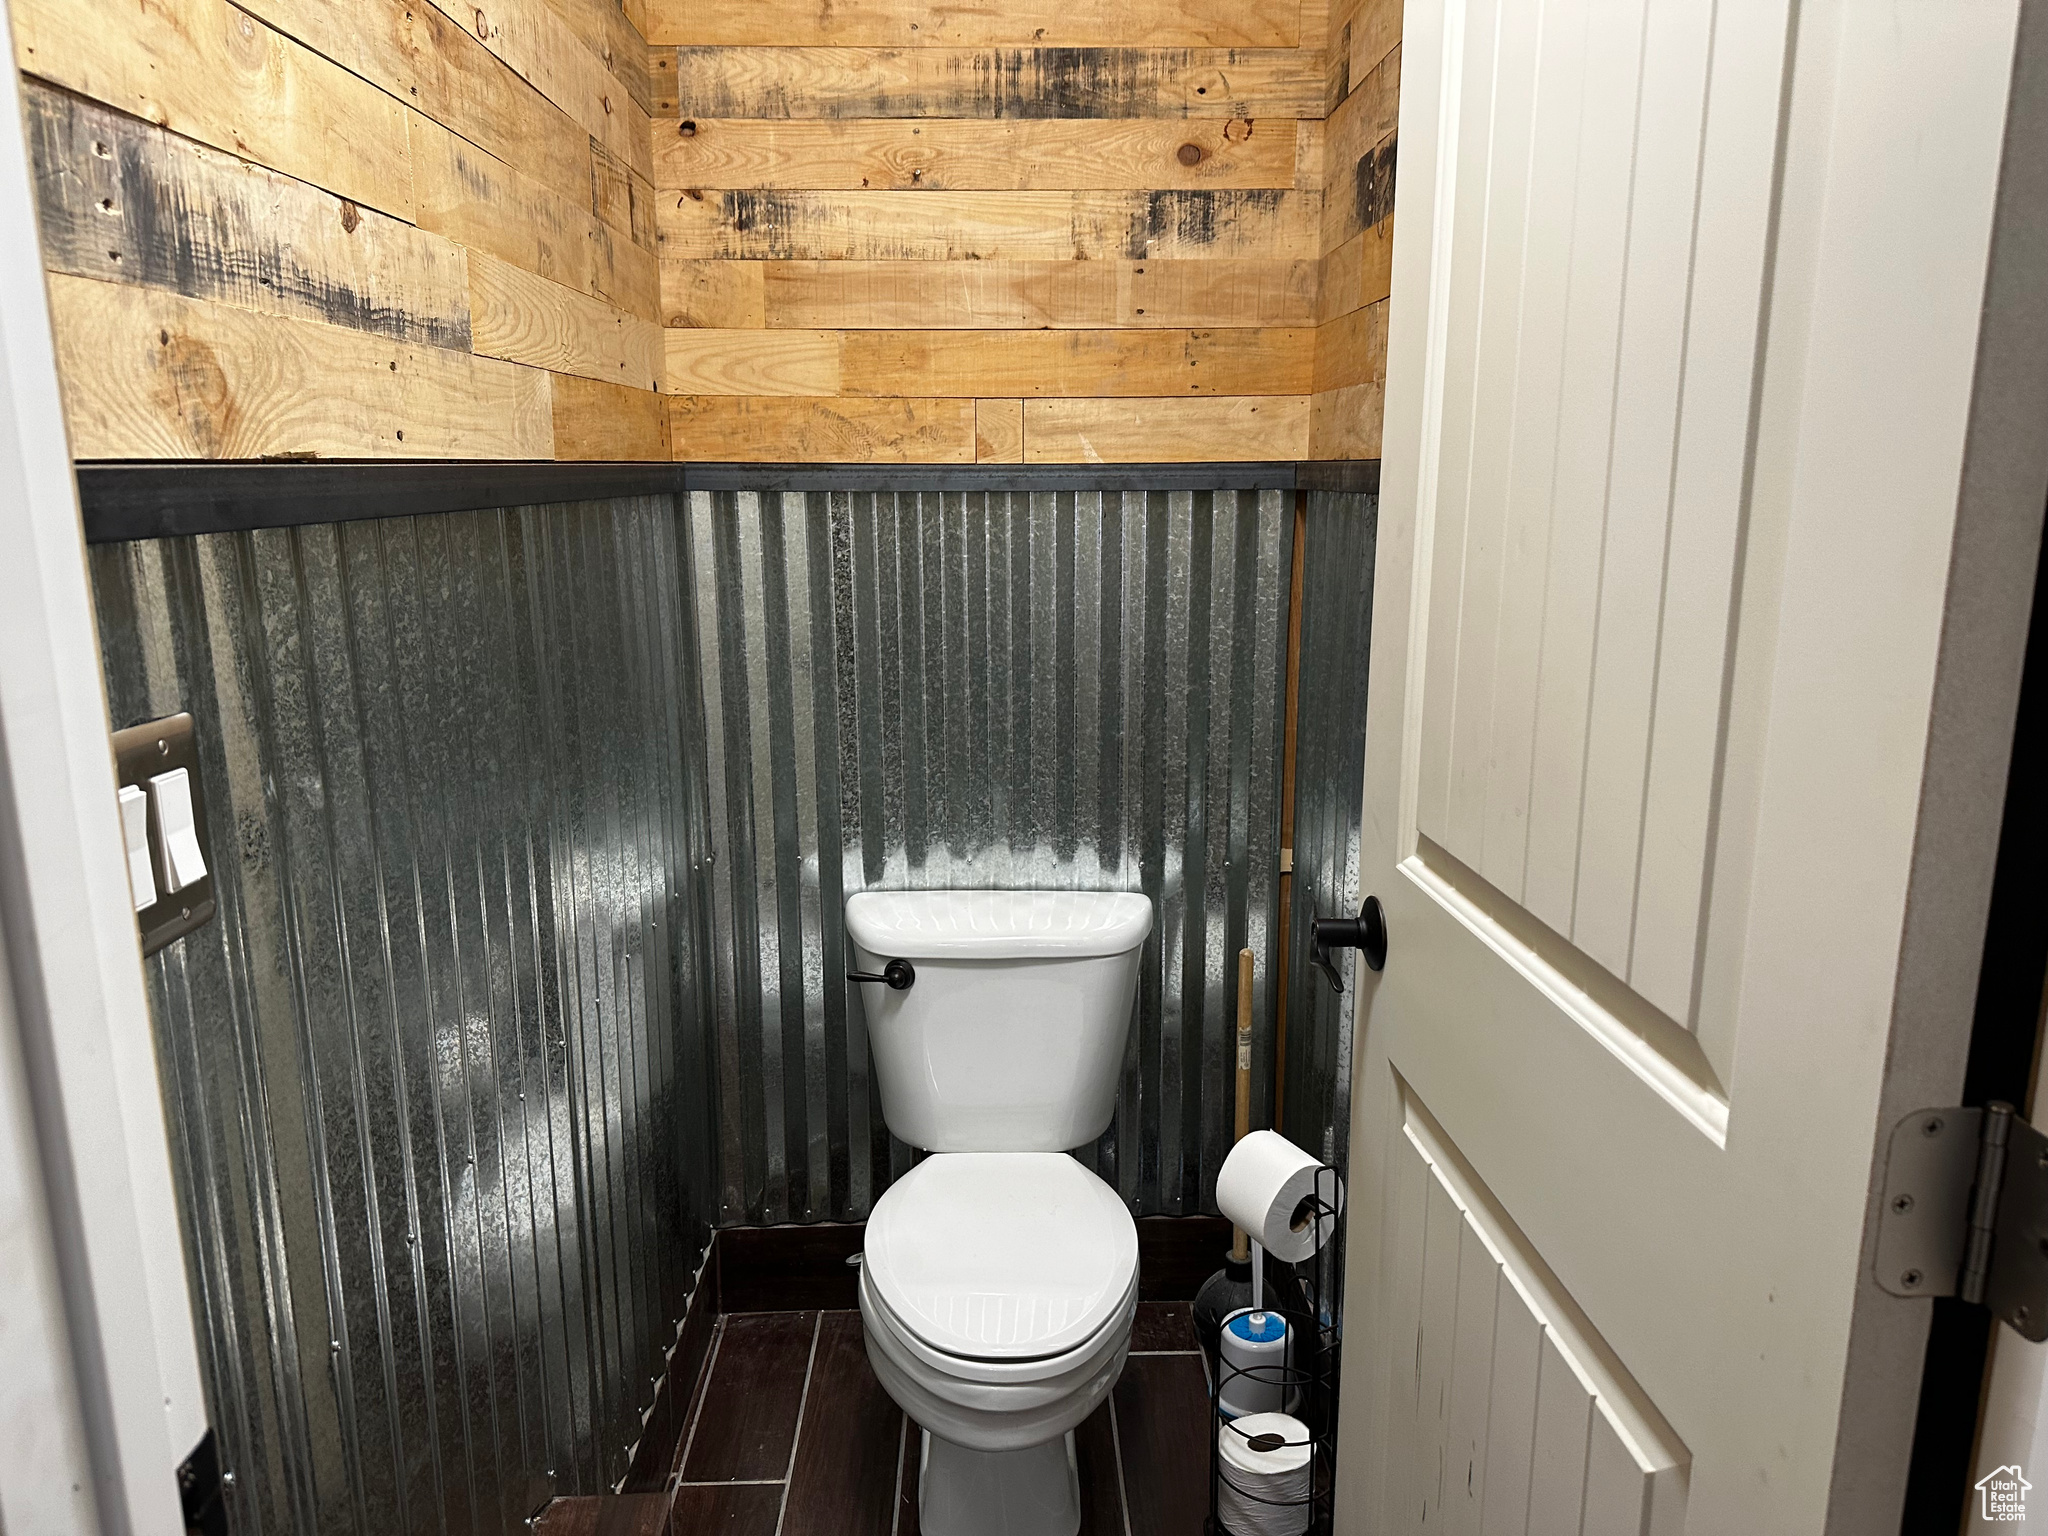 Bathroom featuring wooden walls & toilet